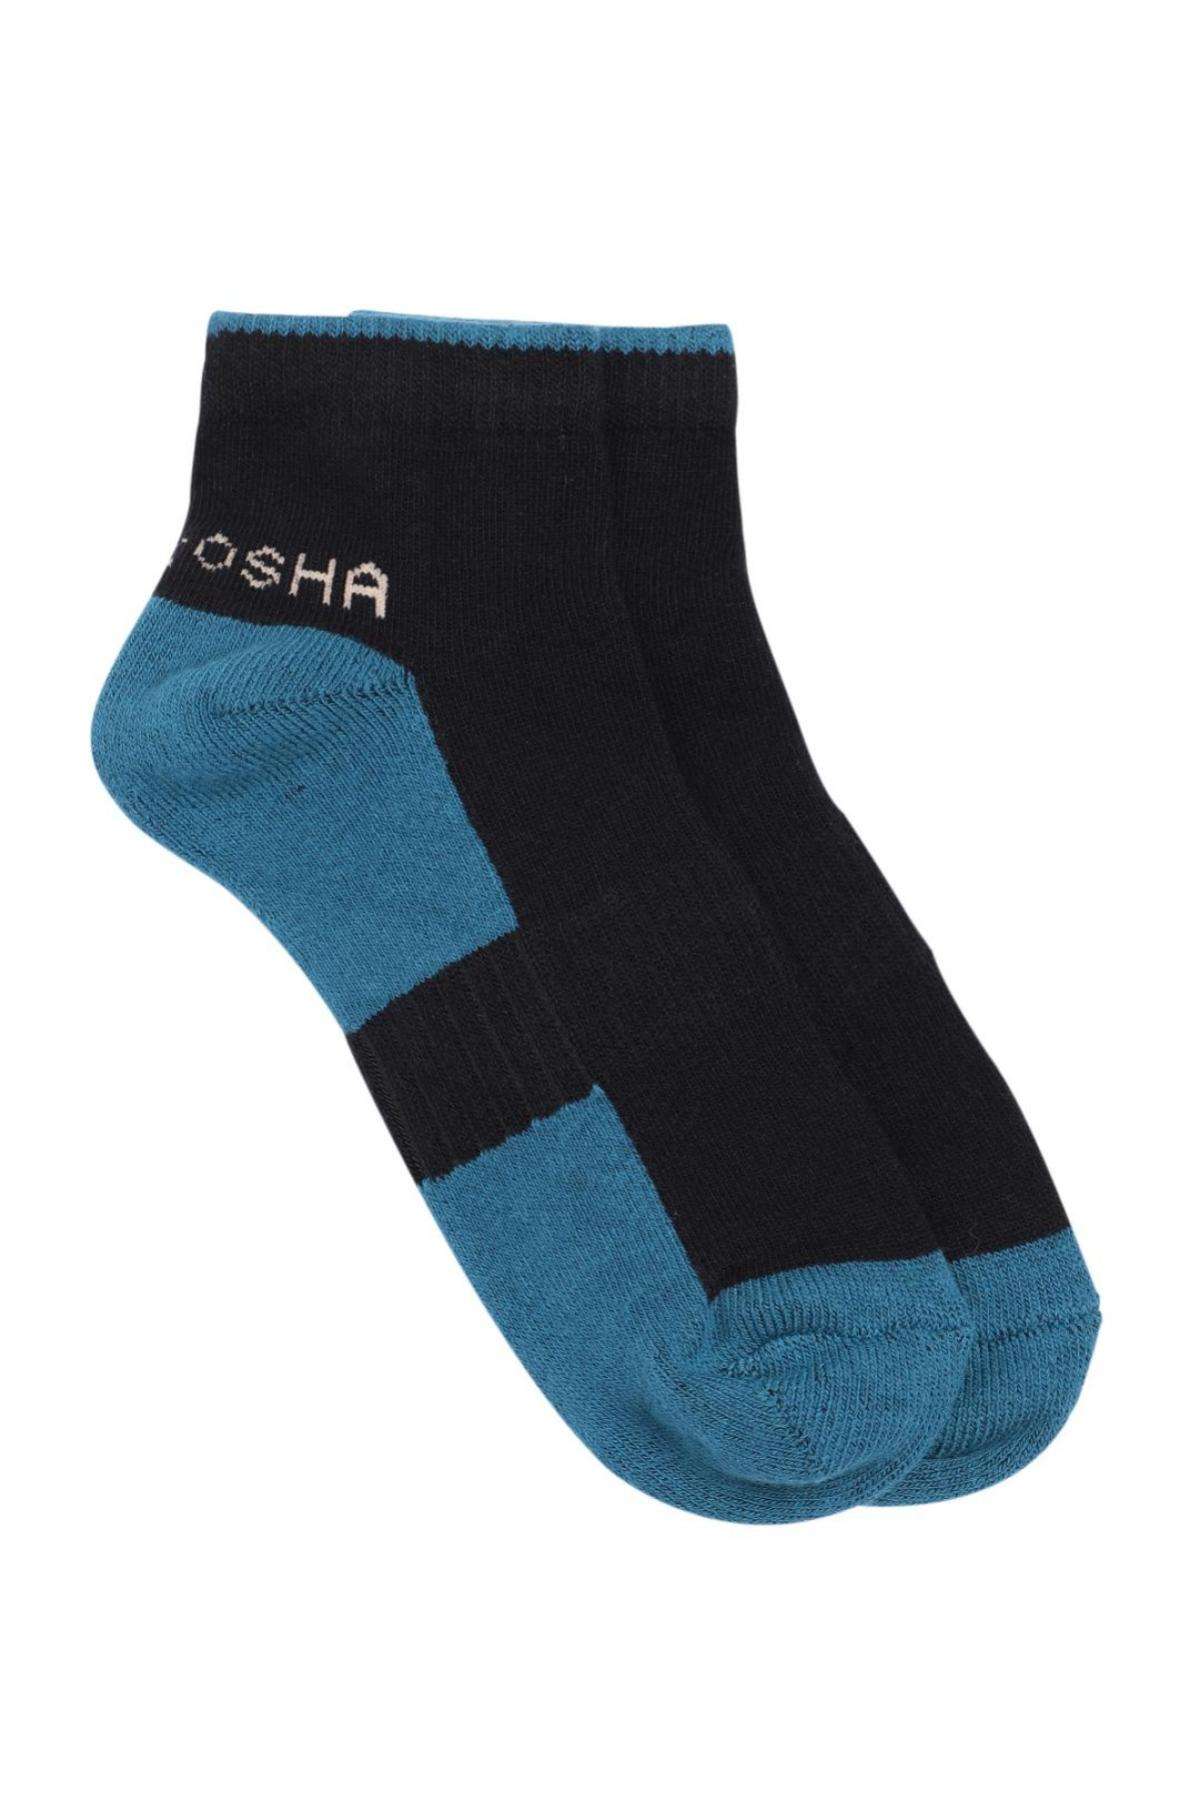 Black & Teal Ankle Length Cotton Sports Socks | Men